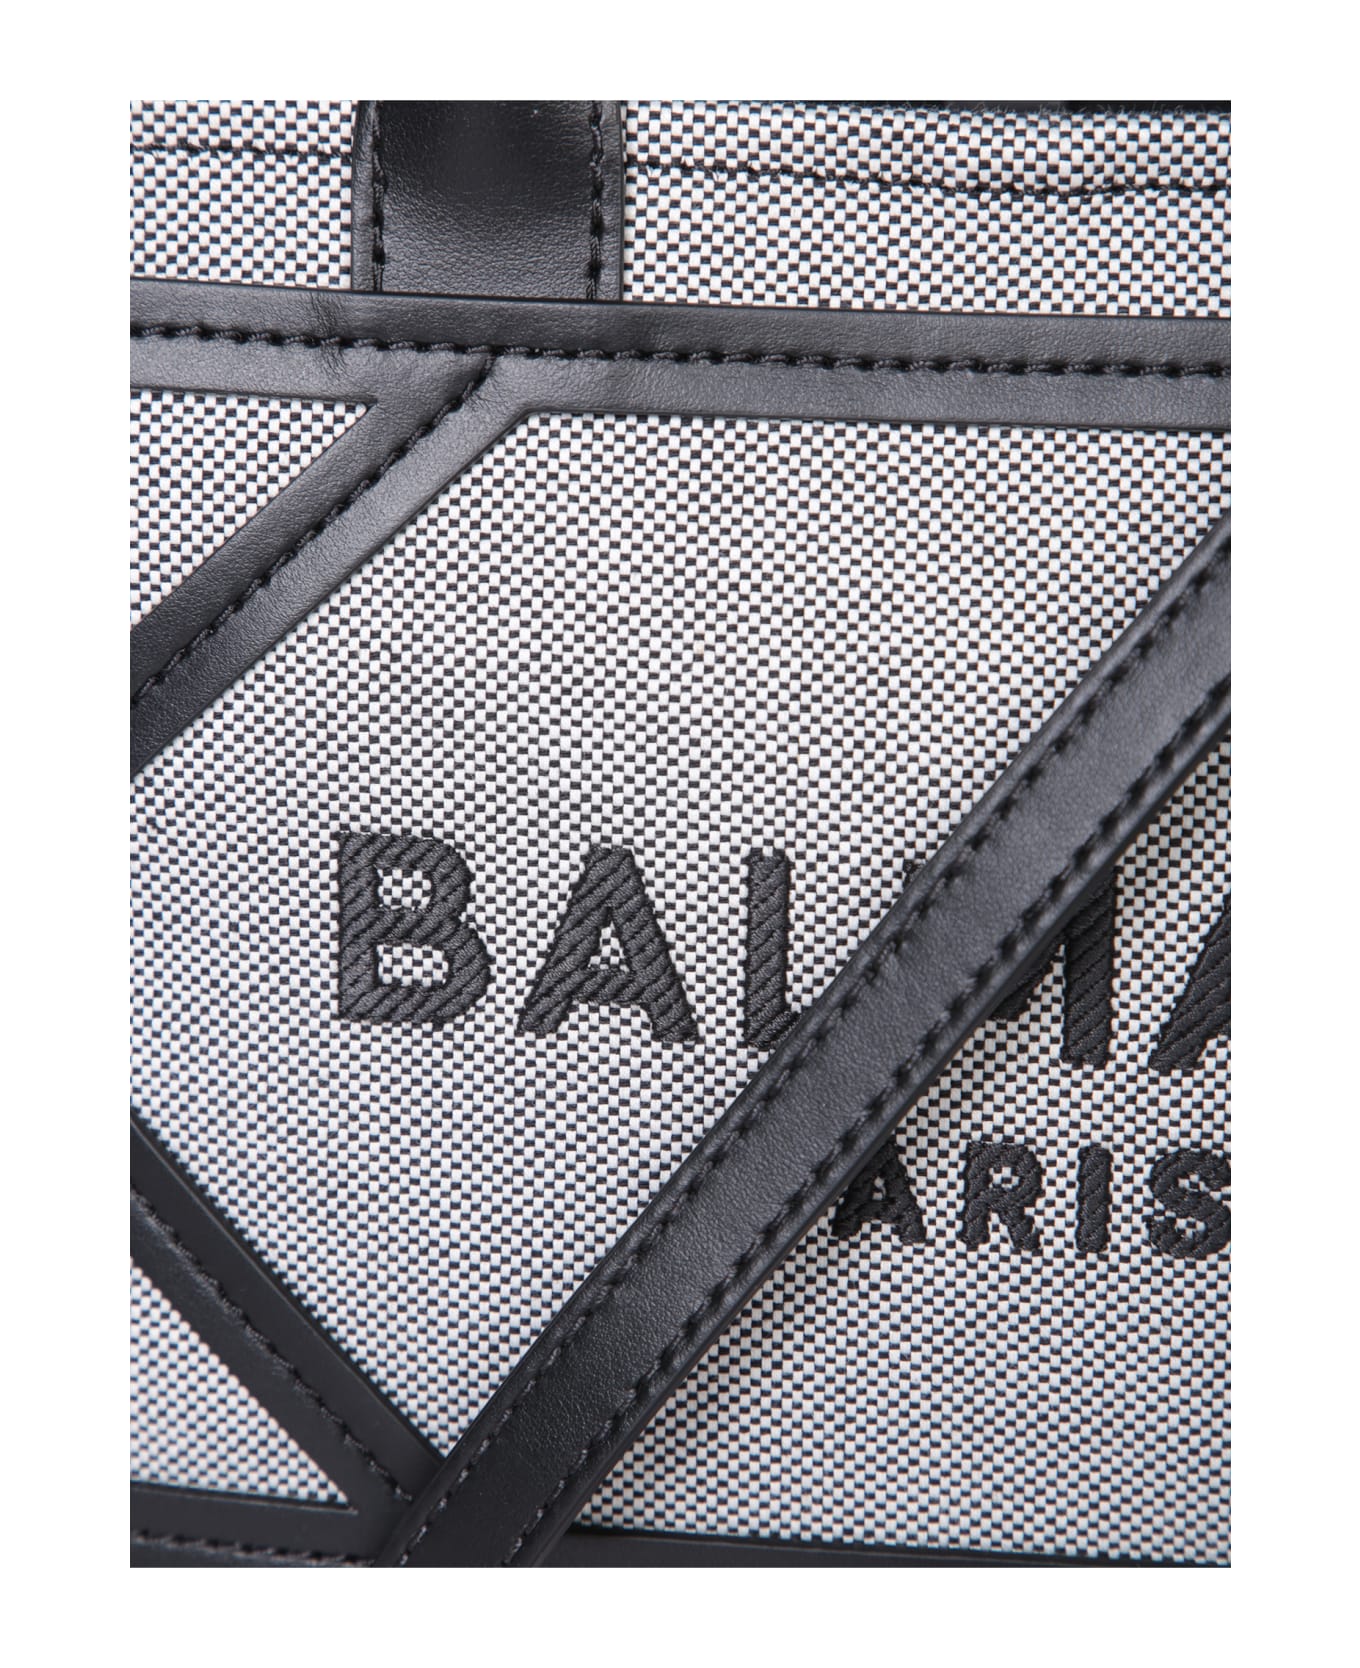 Balmain Barmy Shop Small Canvas Bag In Black And White - Black